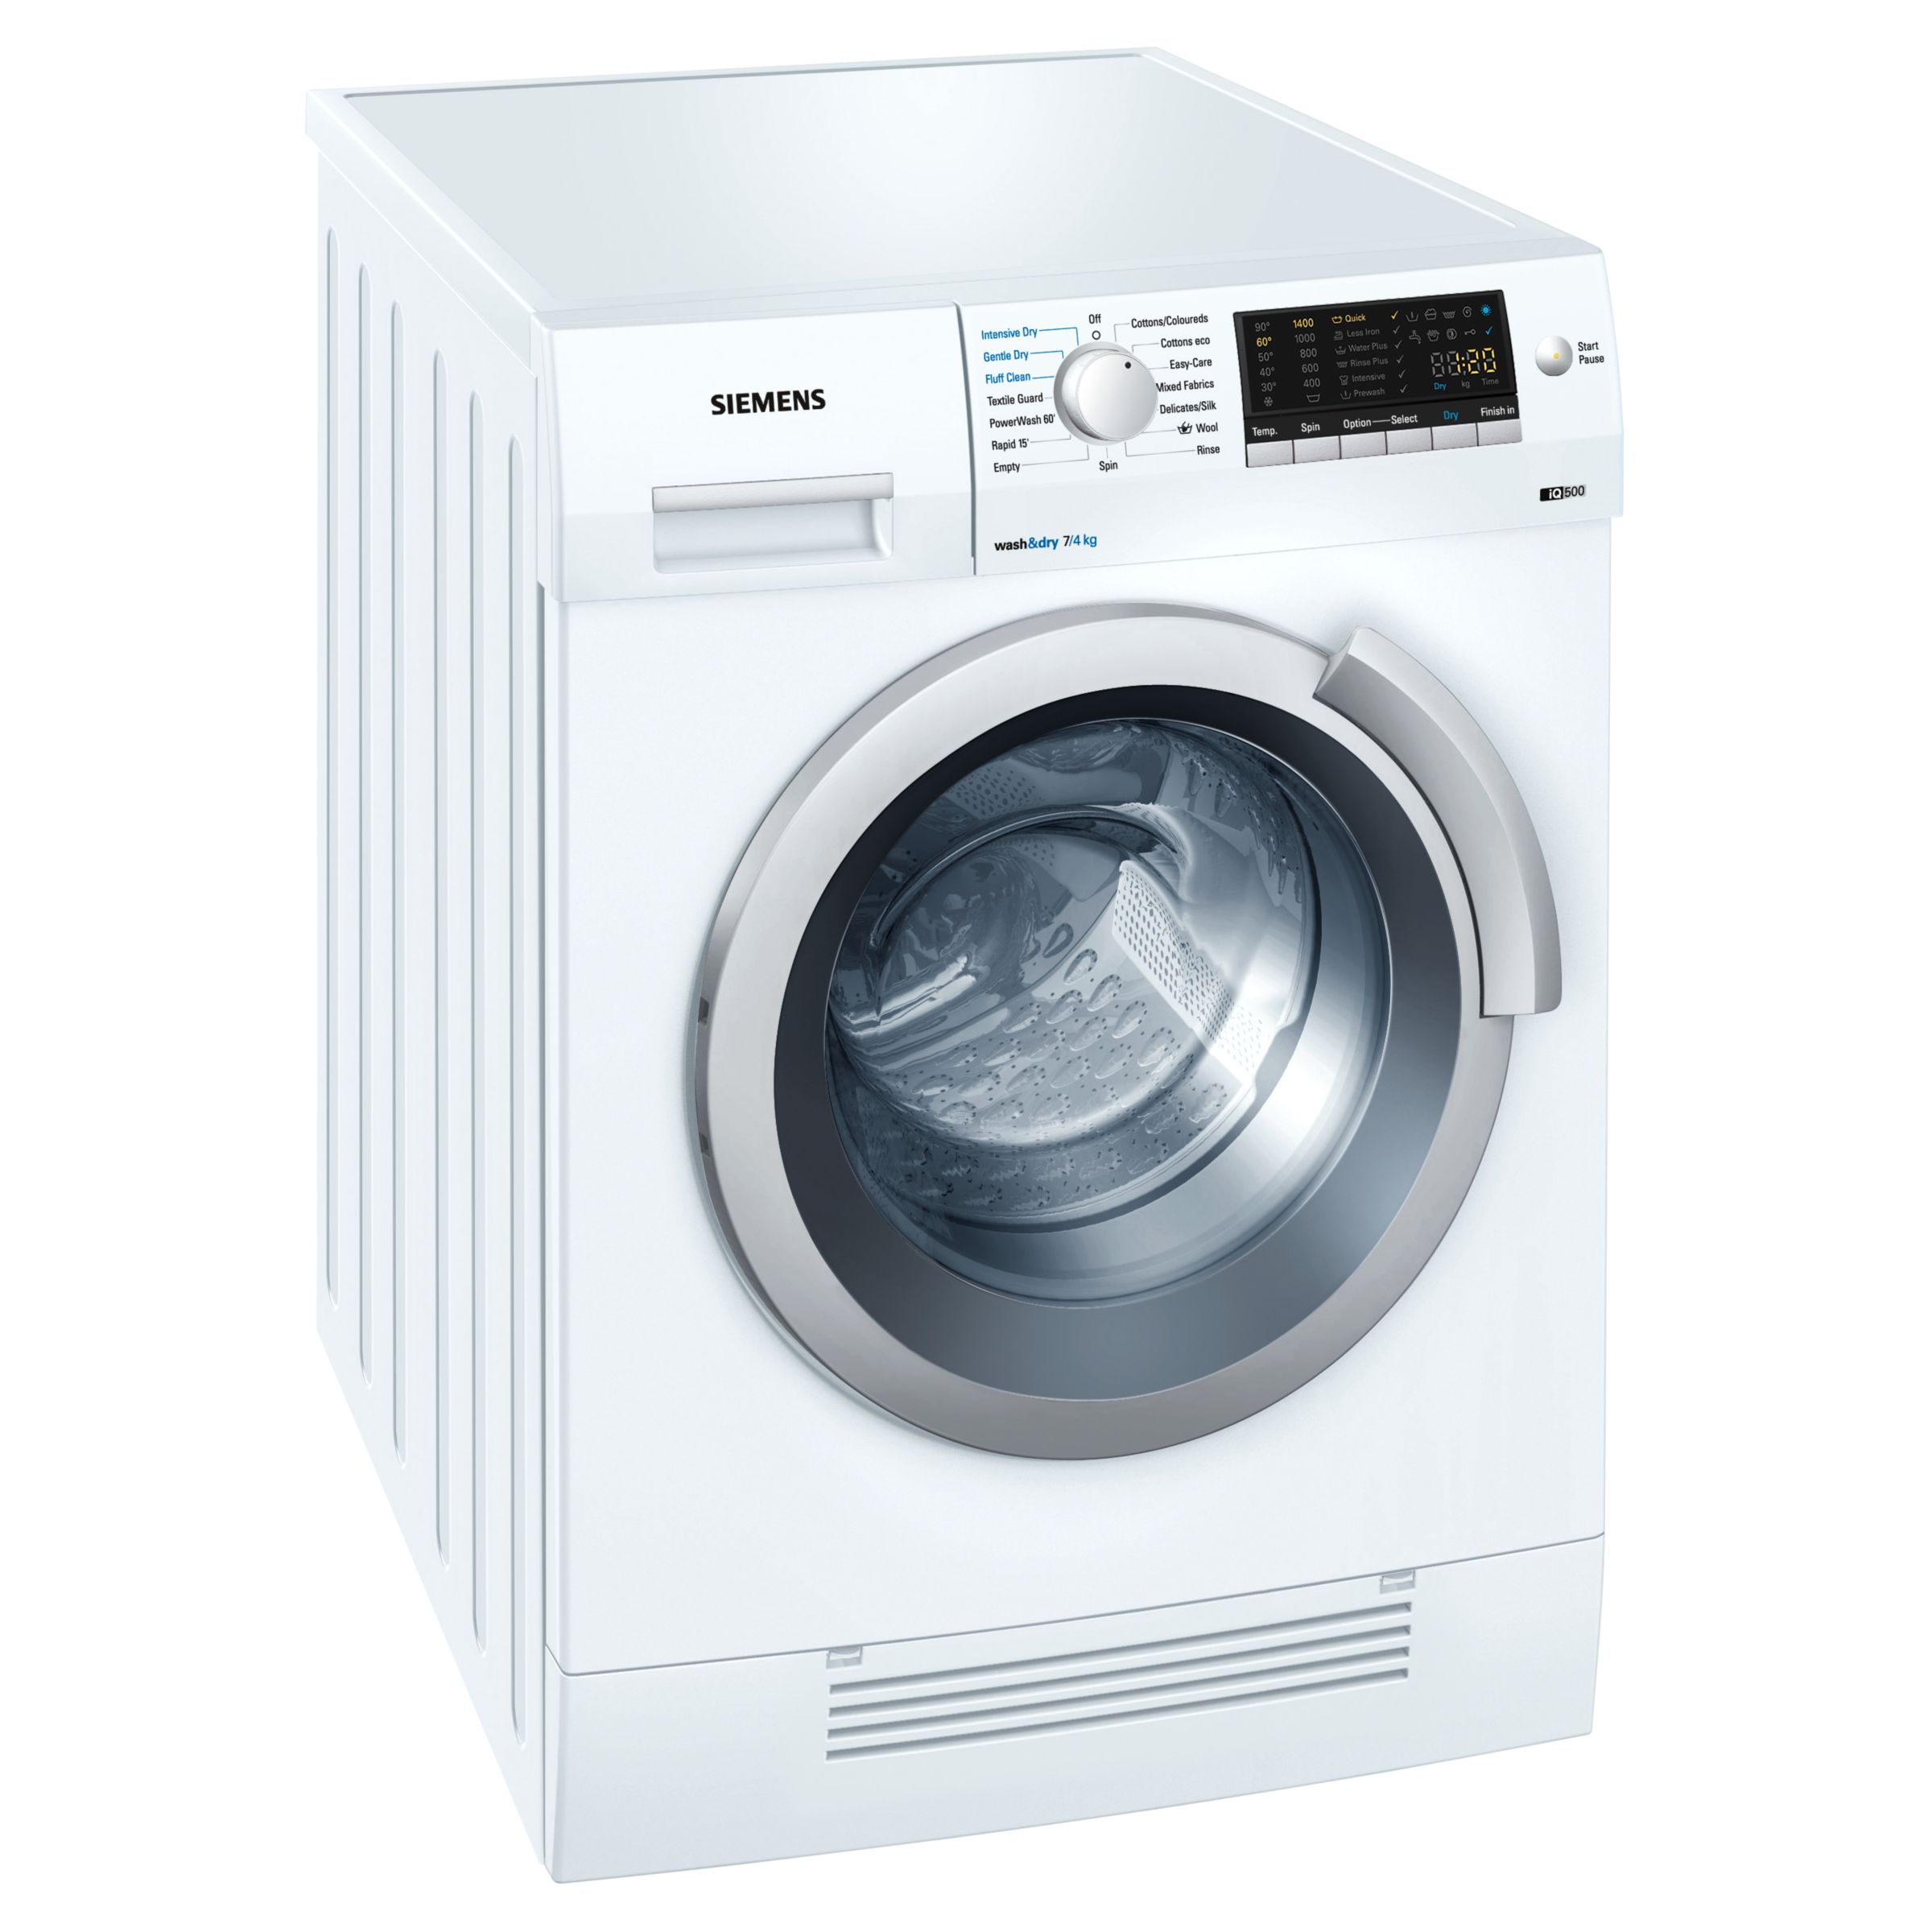 Siemens WD14H420GB Washer Dryer, White at John Lewis